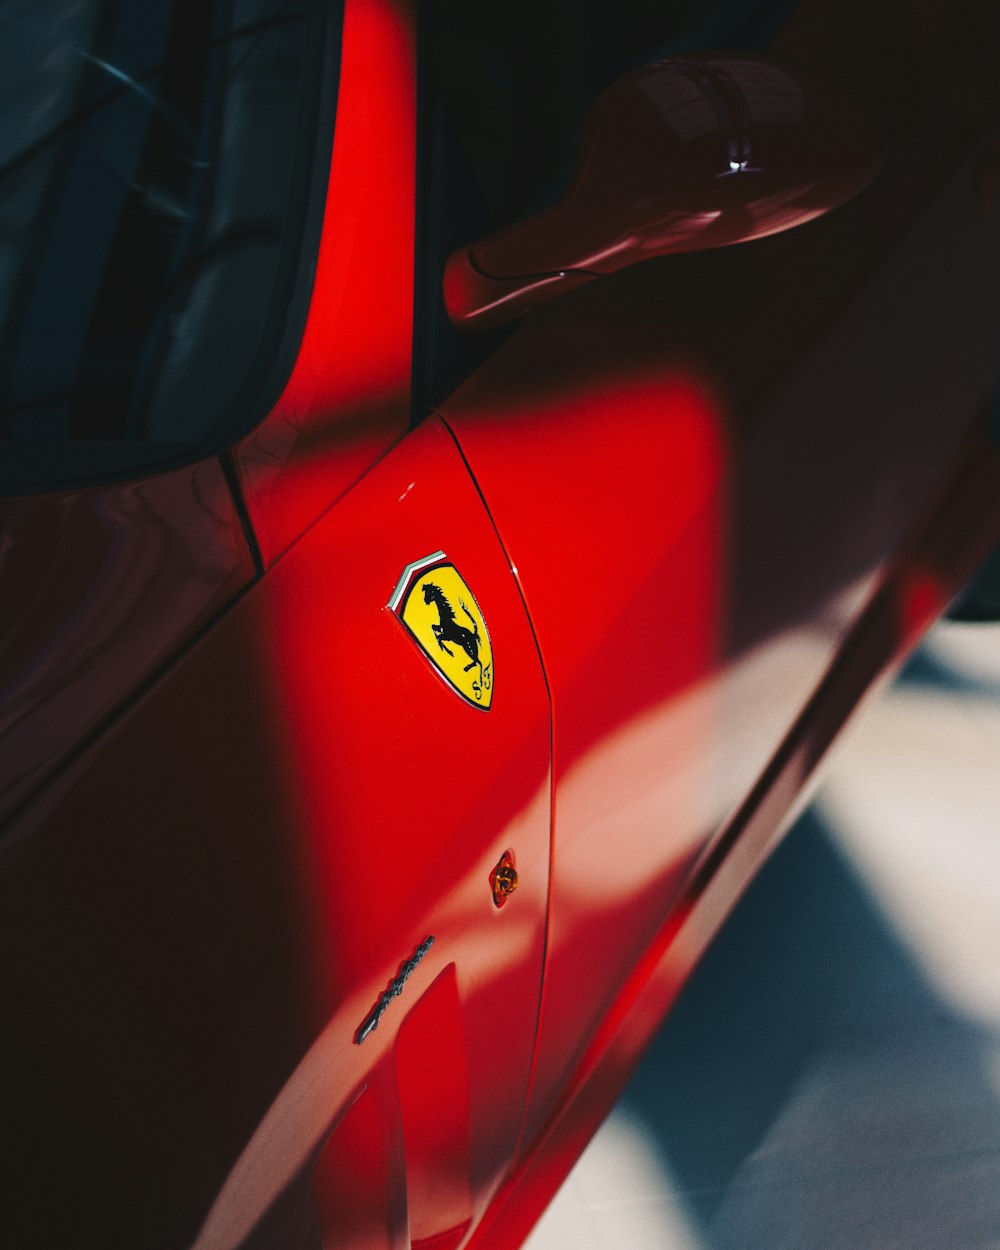 Ferrari Logo Pictures | Download Free Images on Unsplash